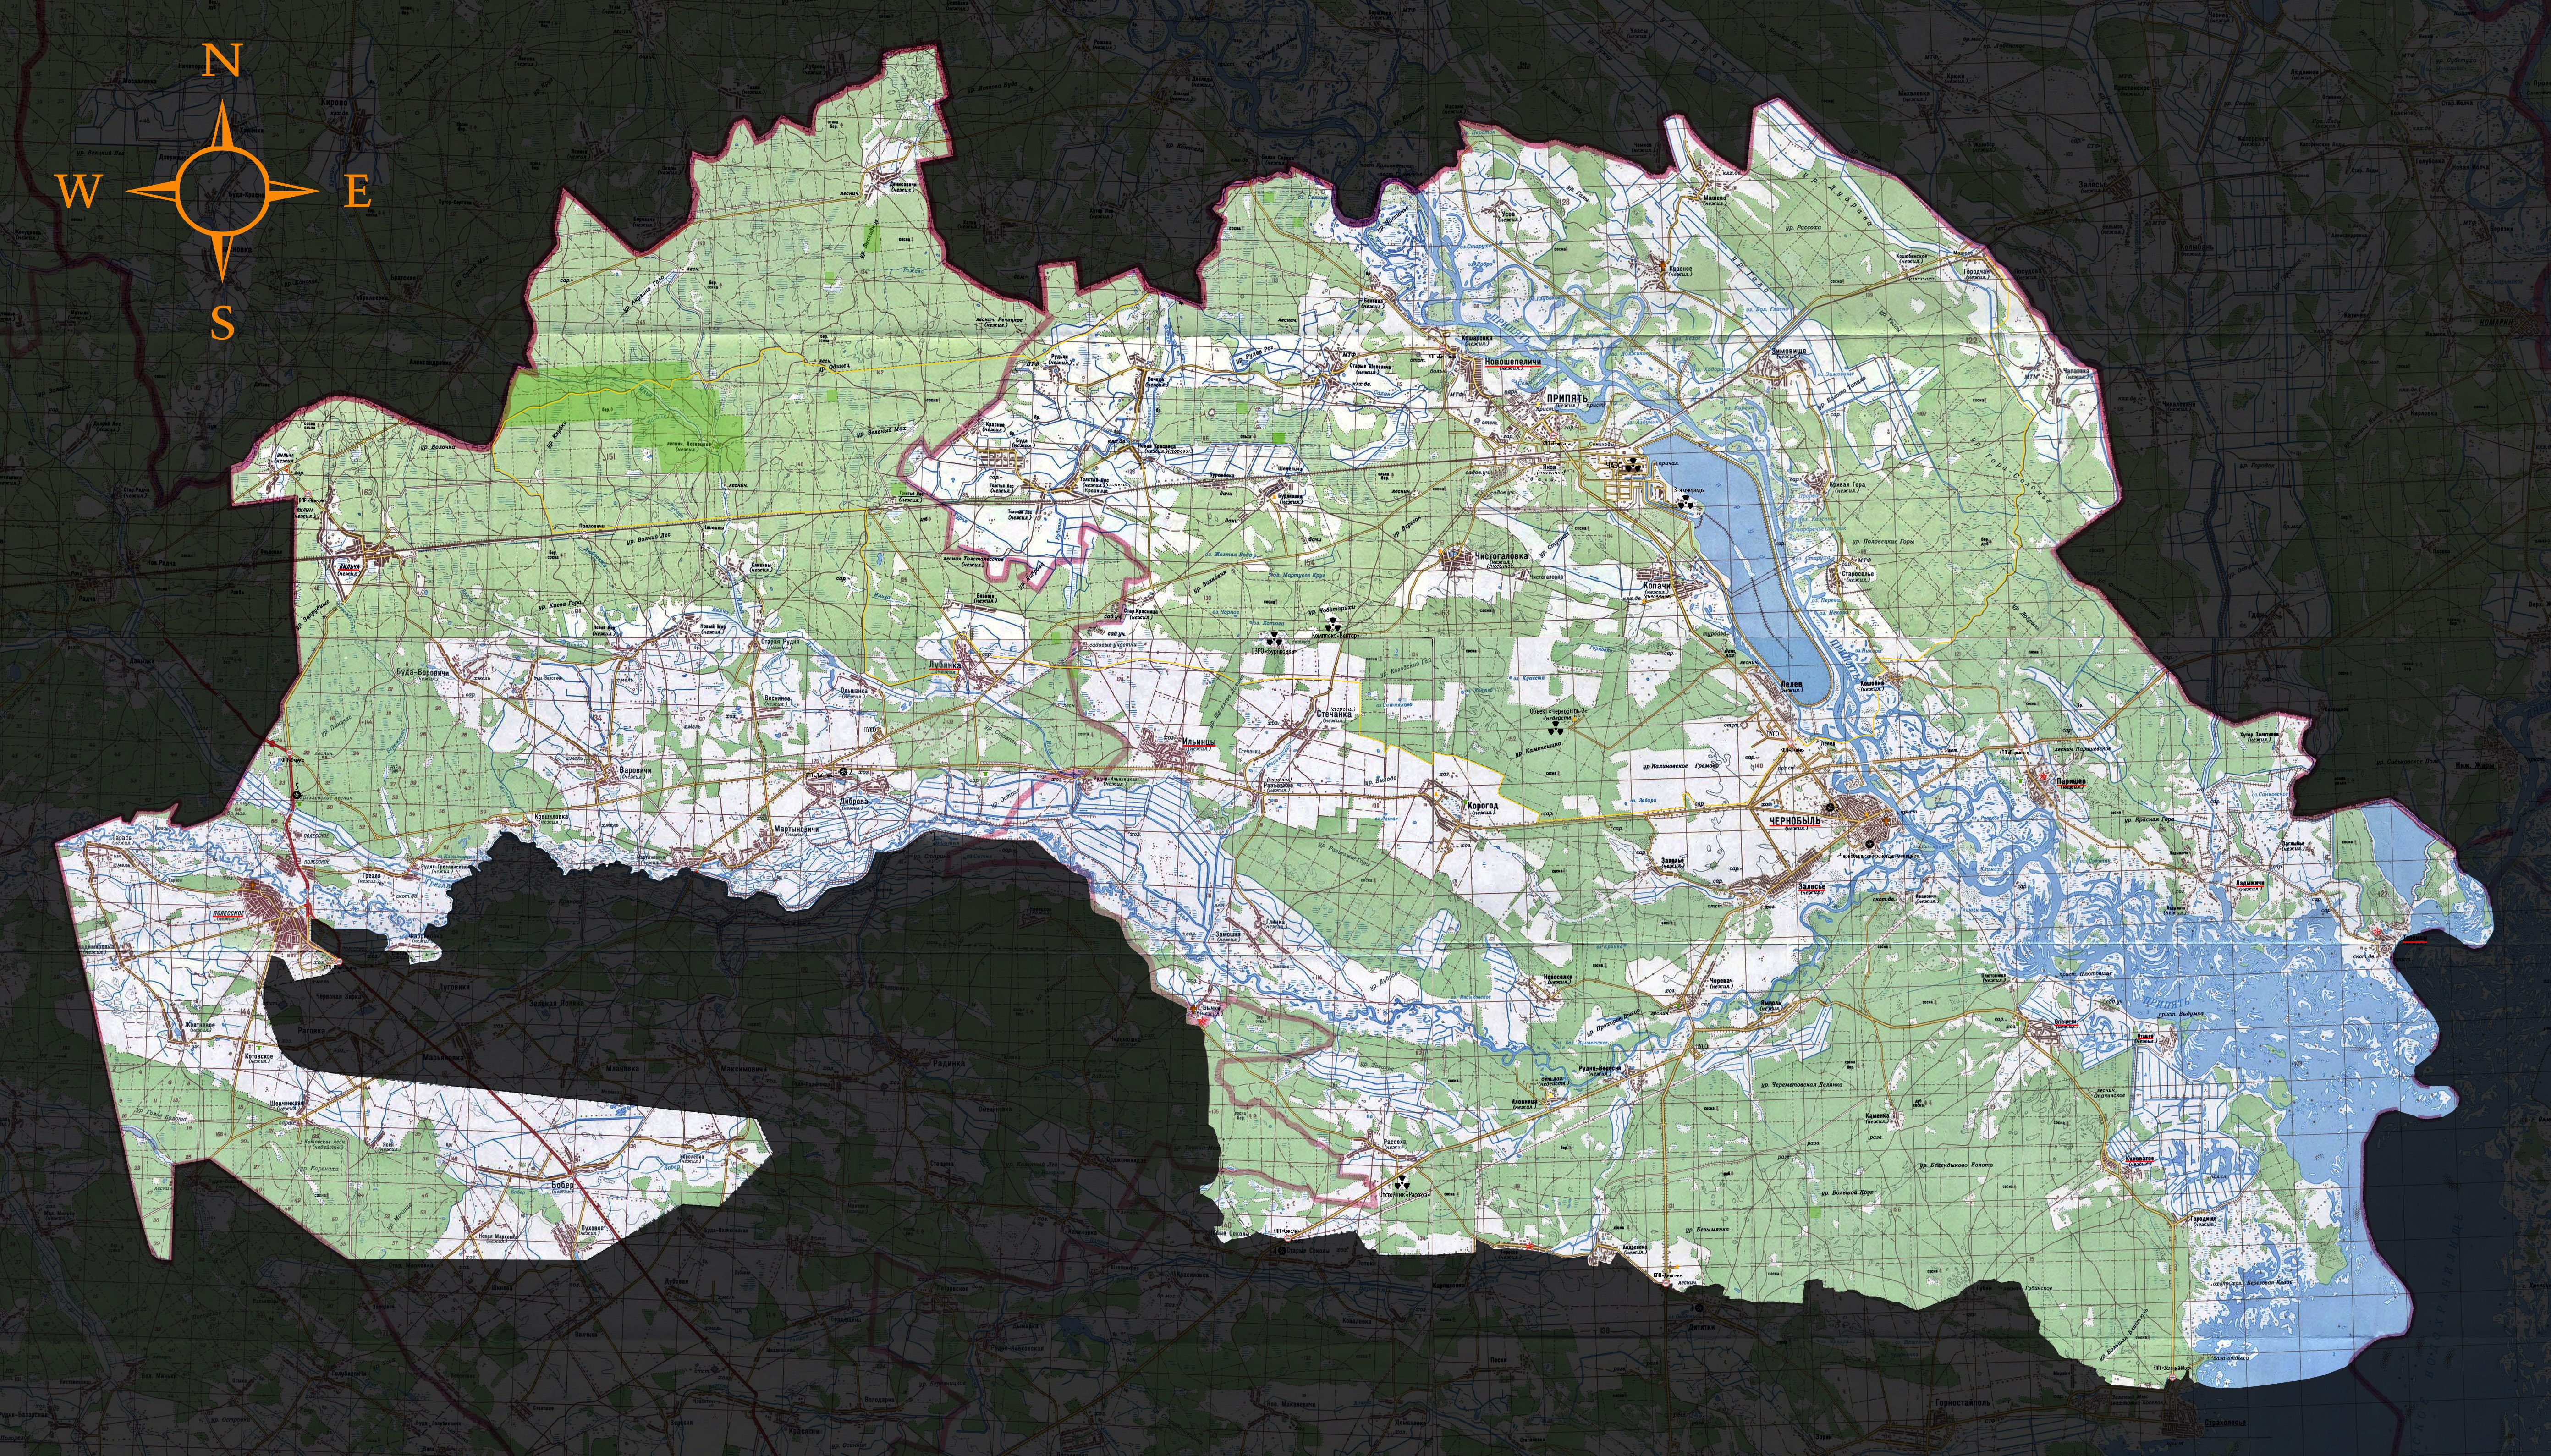 Зона отчуждения на карте. 30 Км зона отчуждения Чернобыльской АЭС. Карта зоны отчуждения Чернобыльской АЭС сталкер. Площадь зоны отчуждения Чернобыльской АЭС на карте. Припять зона отчуждения на карте.